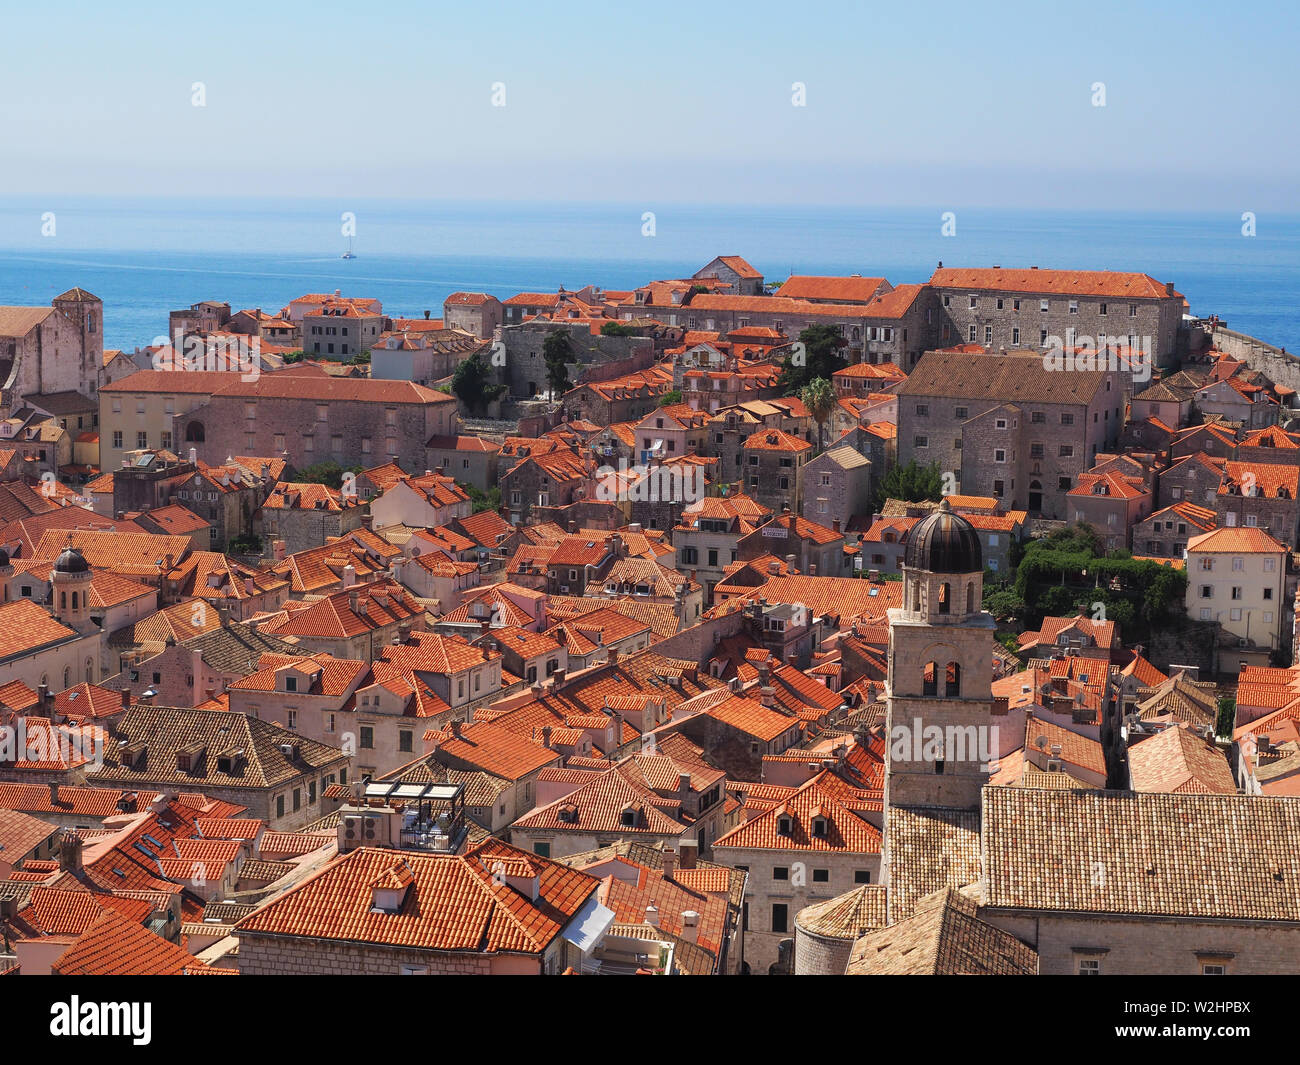 Tejados de terracota de Dubrovnik casco antiguo Foto de stock